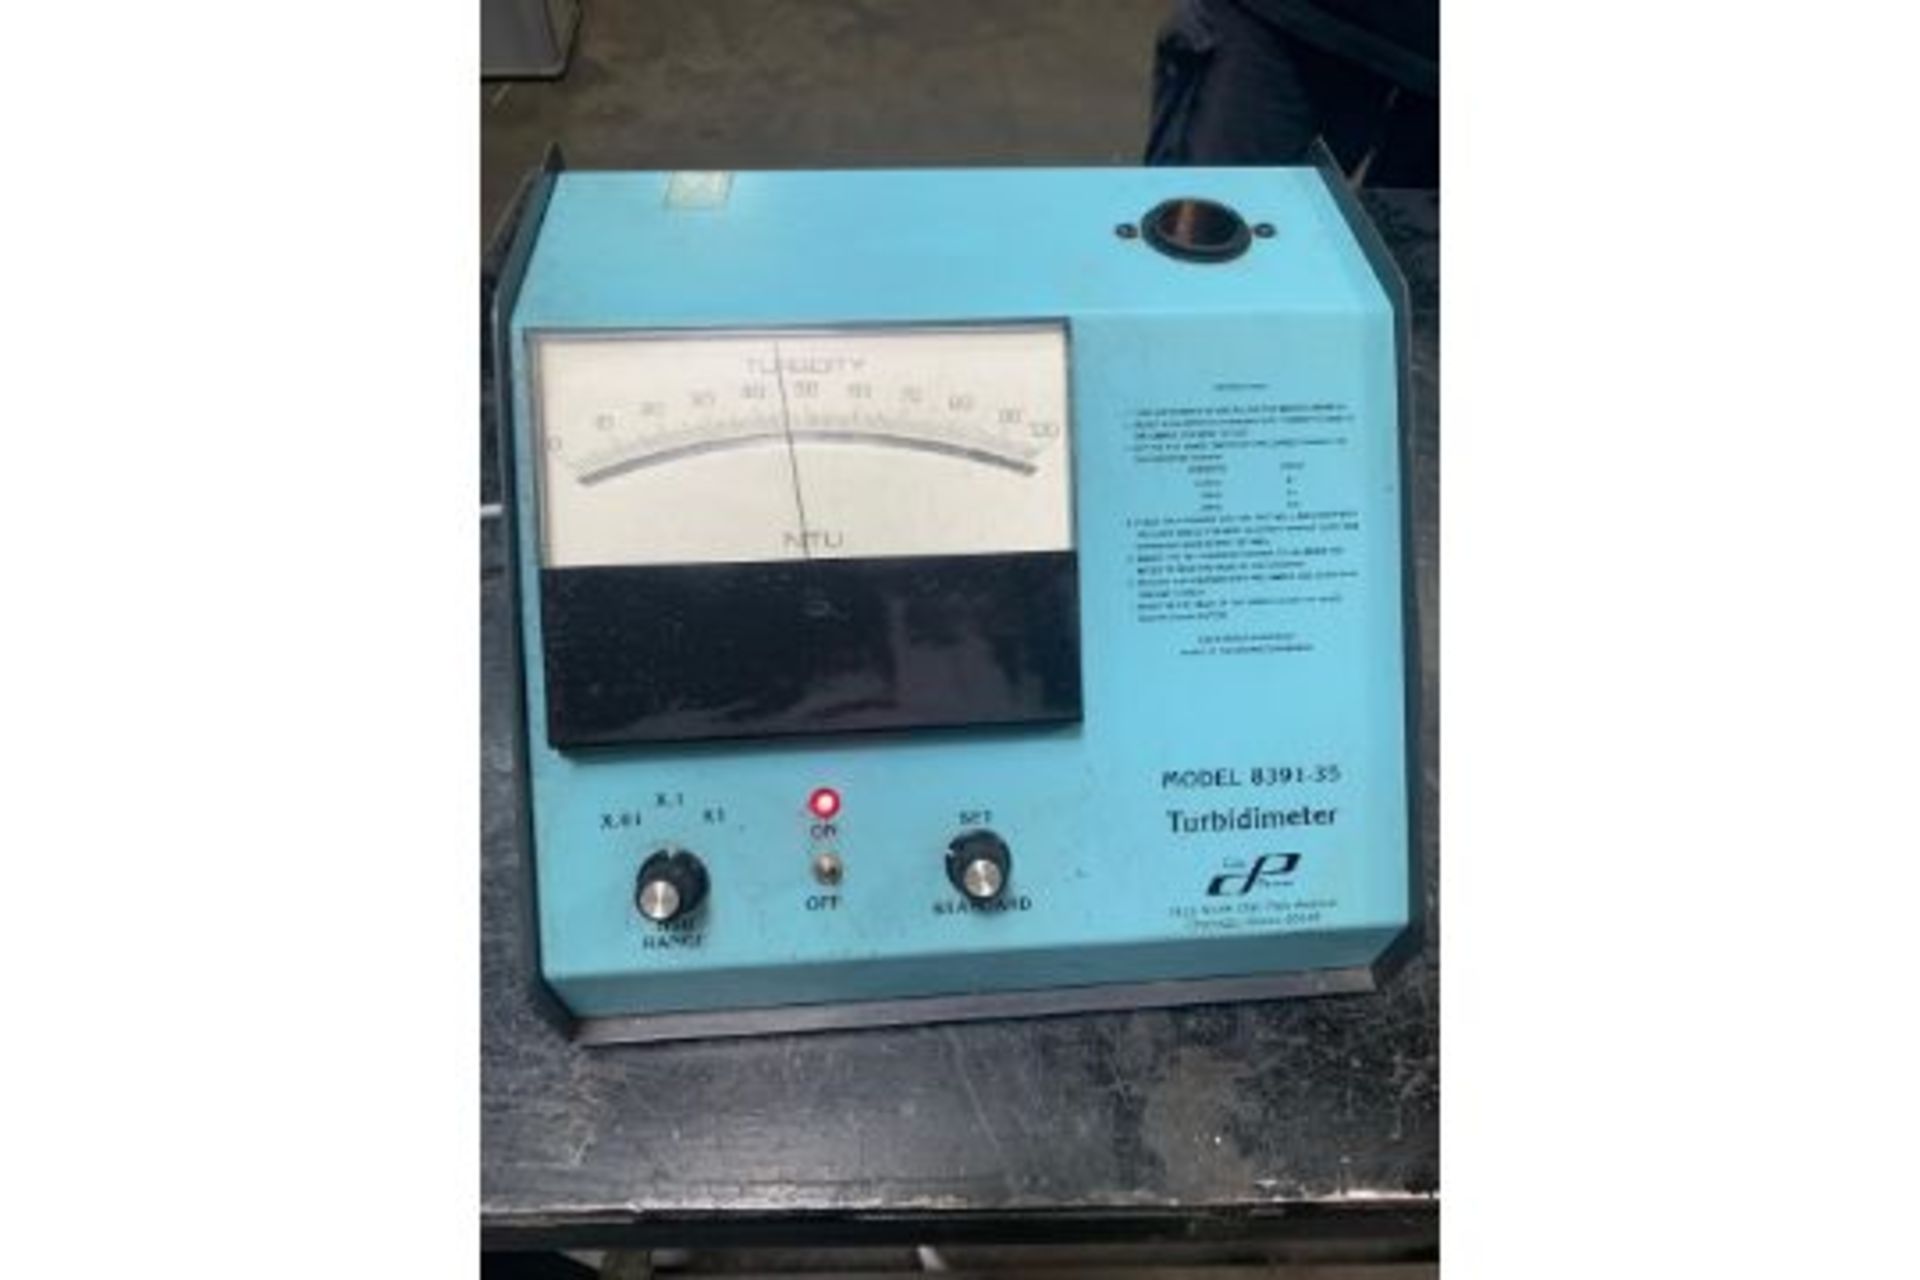 Turbidimeter Meter Model 8391-35 110 Volts, Rigging Fee: $25